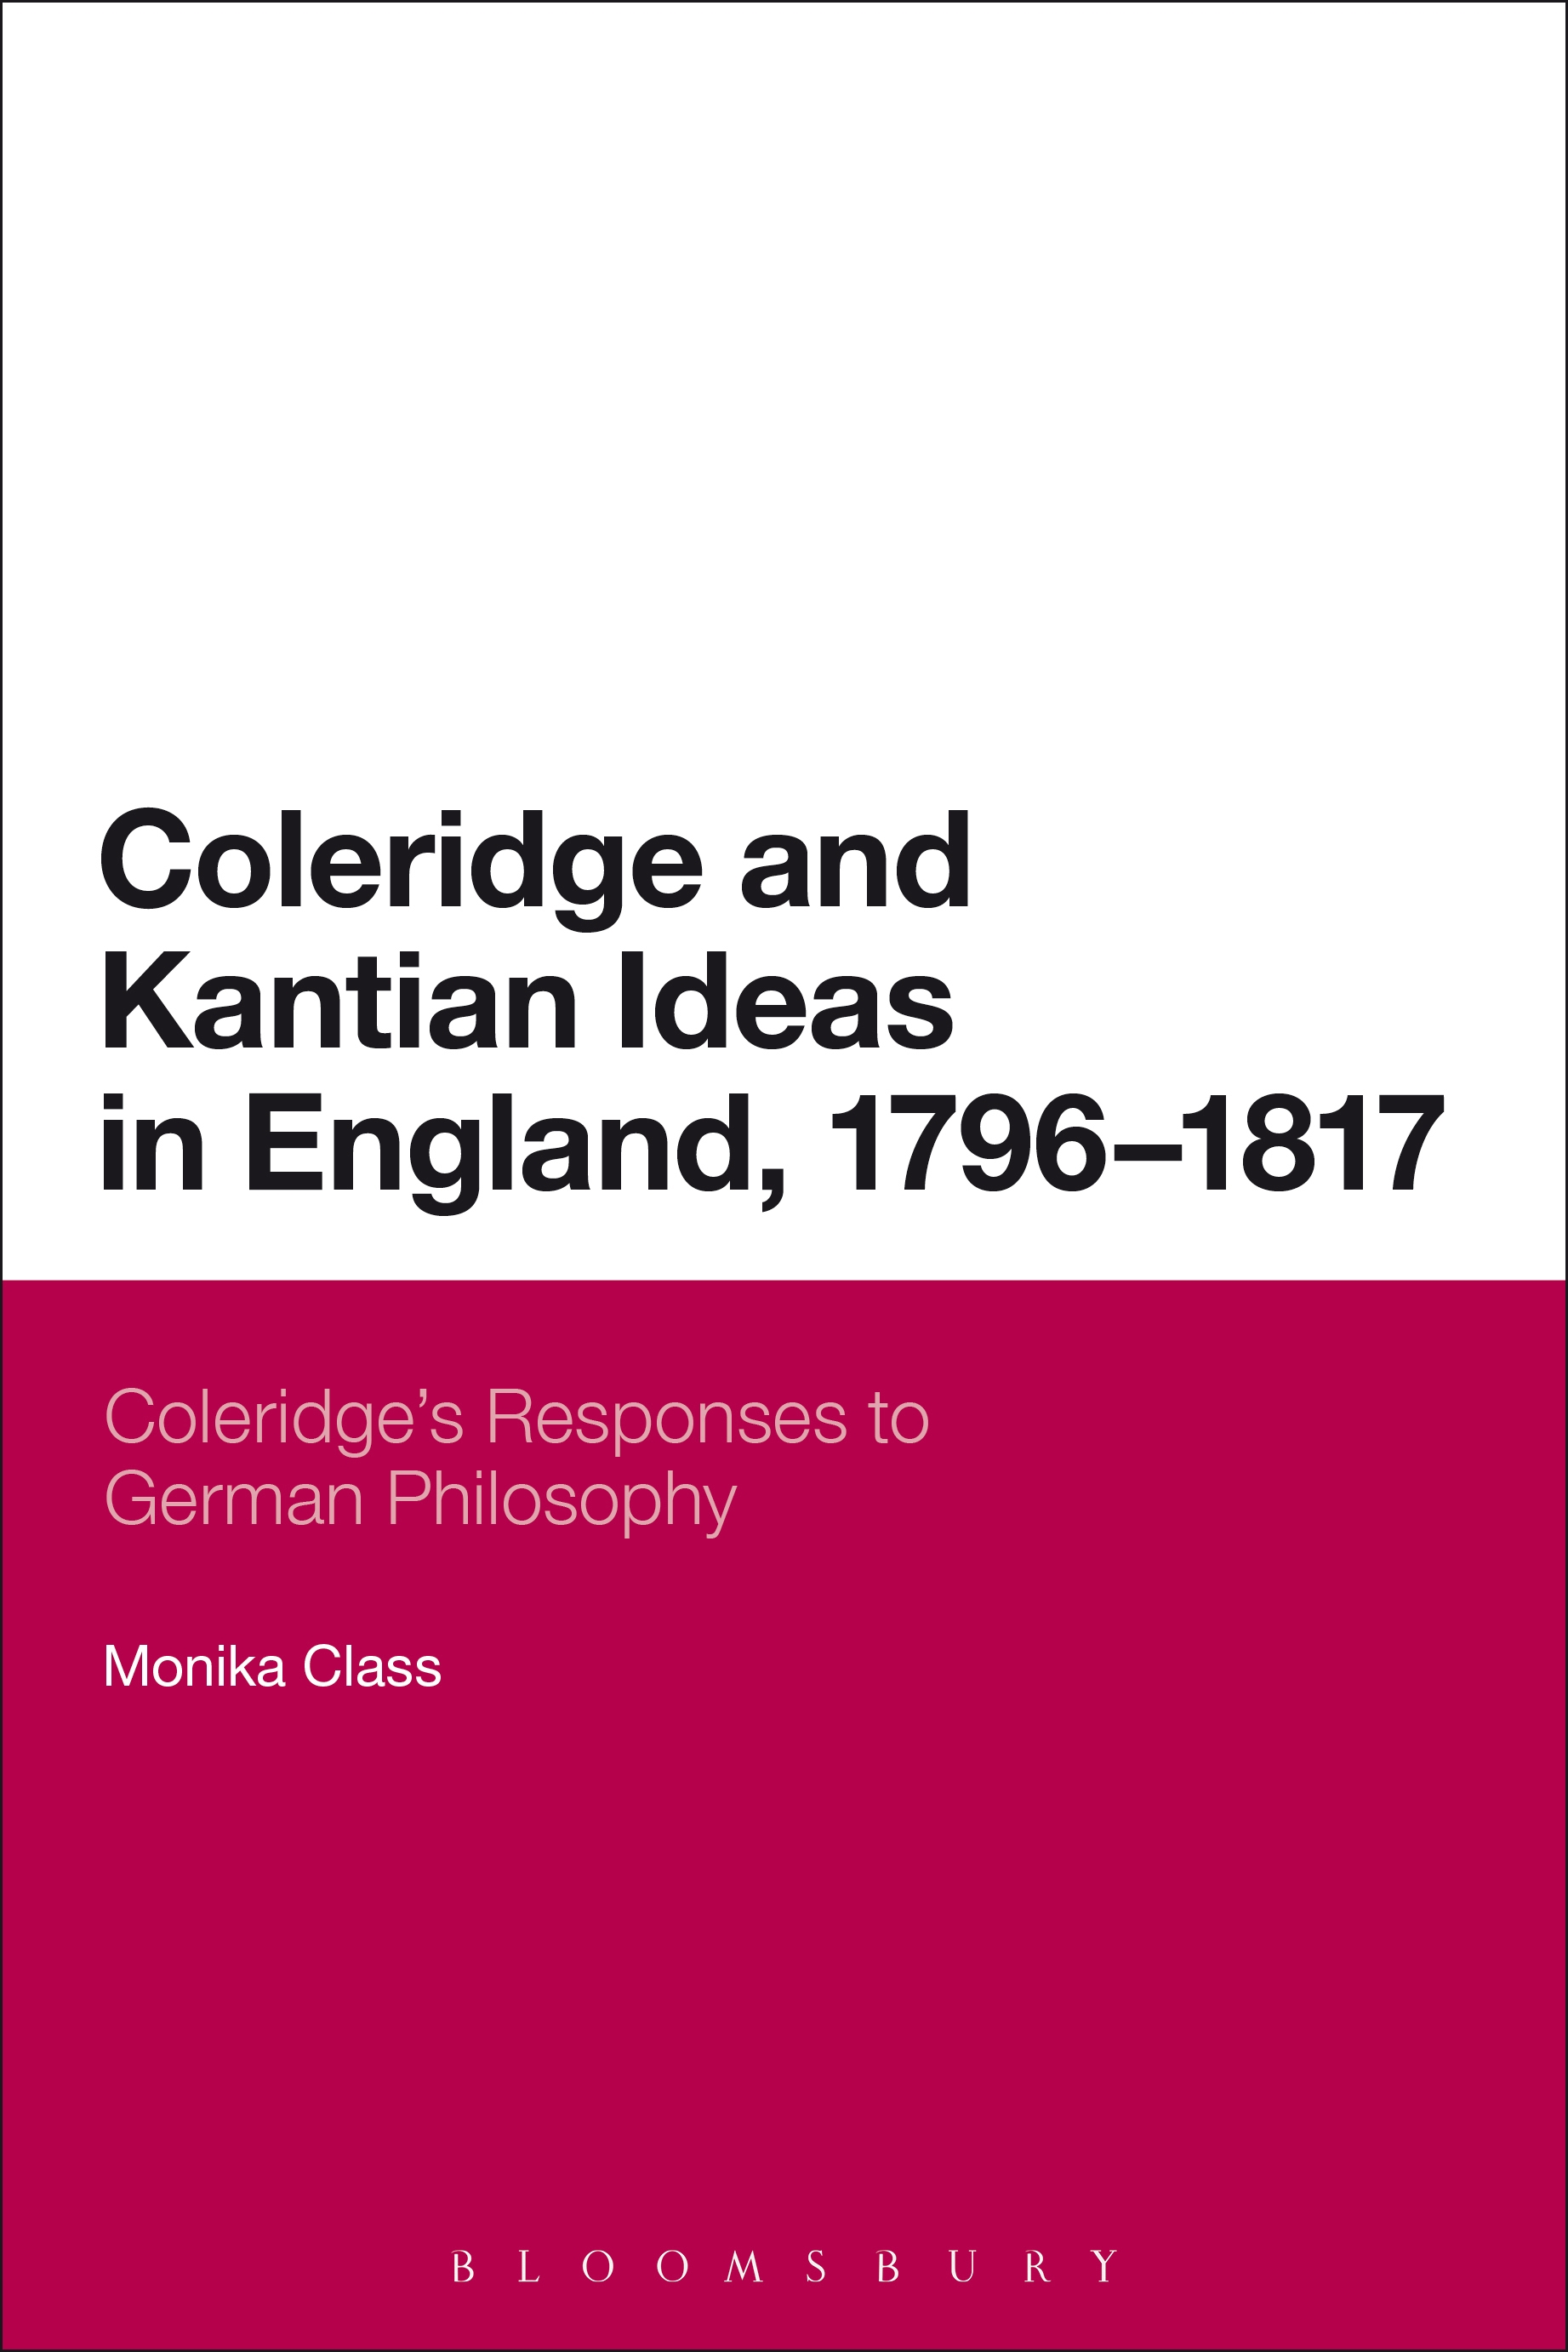 Coleridge and Kantian Ideas in England, 1796-1817 - 25-49.99